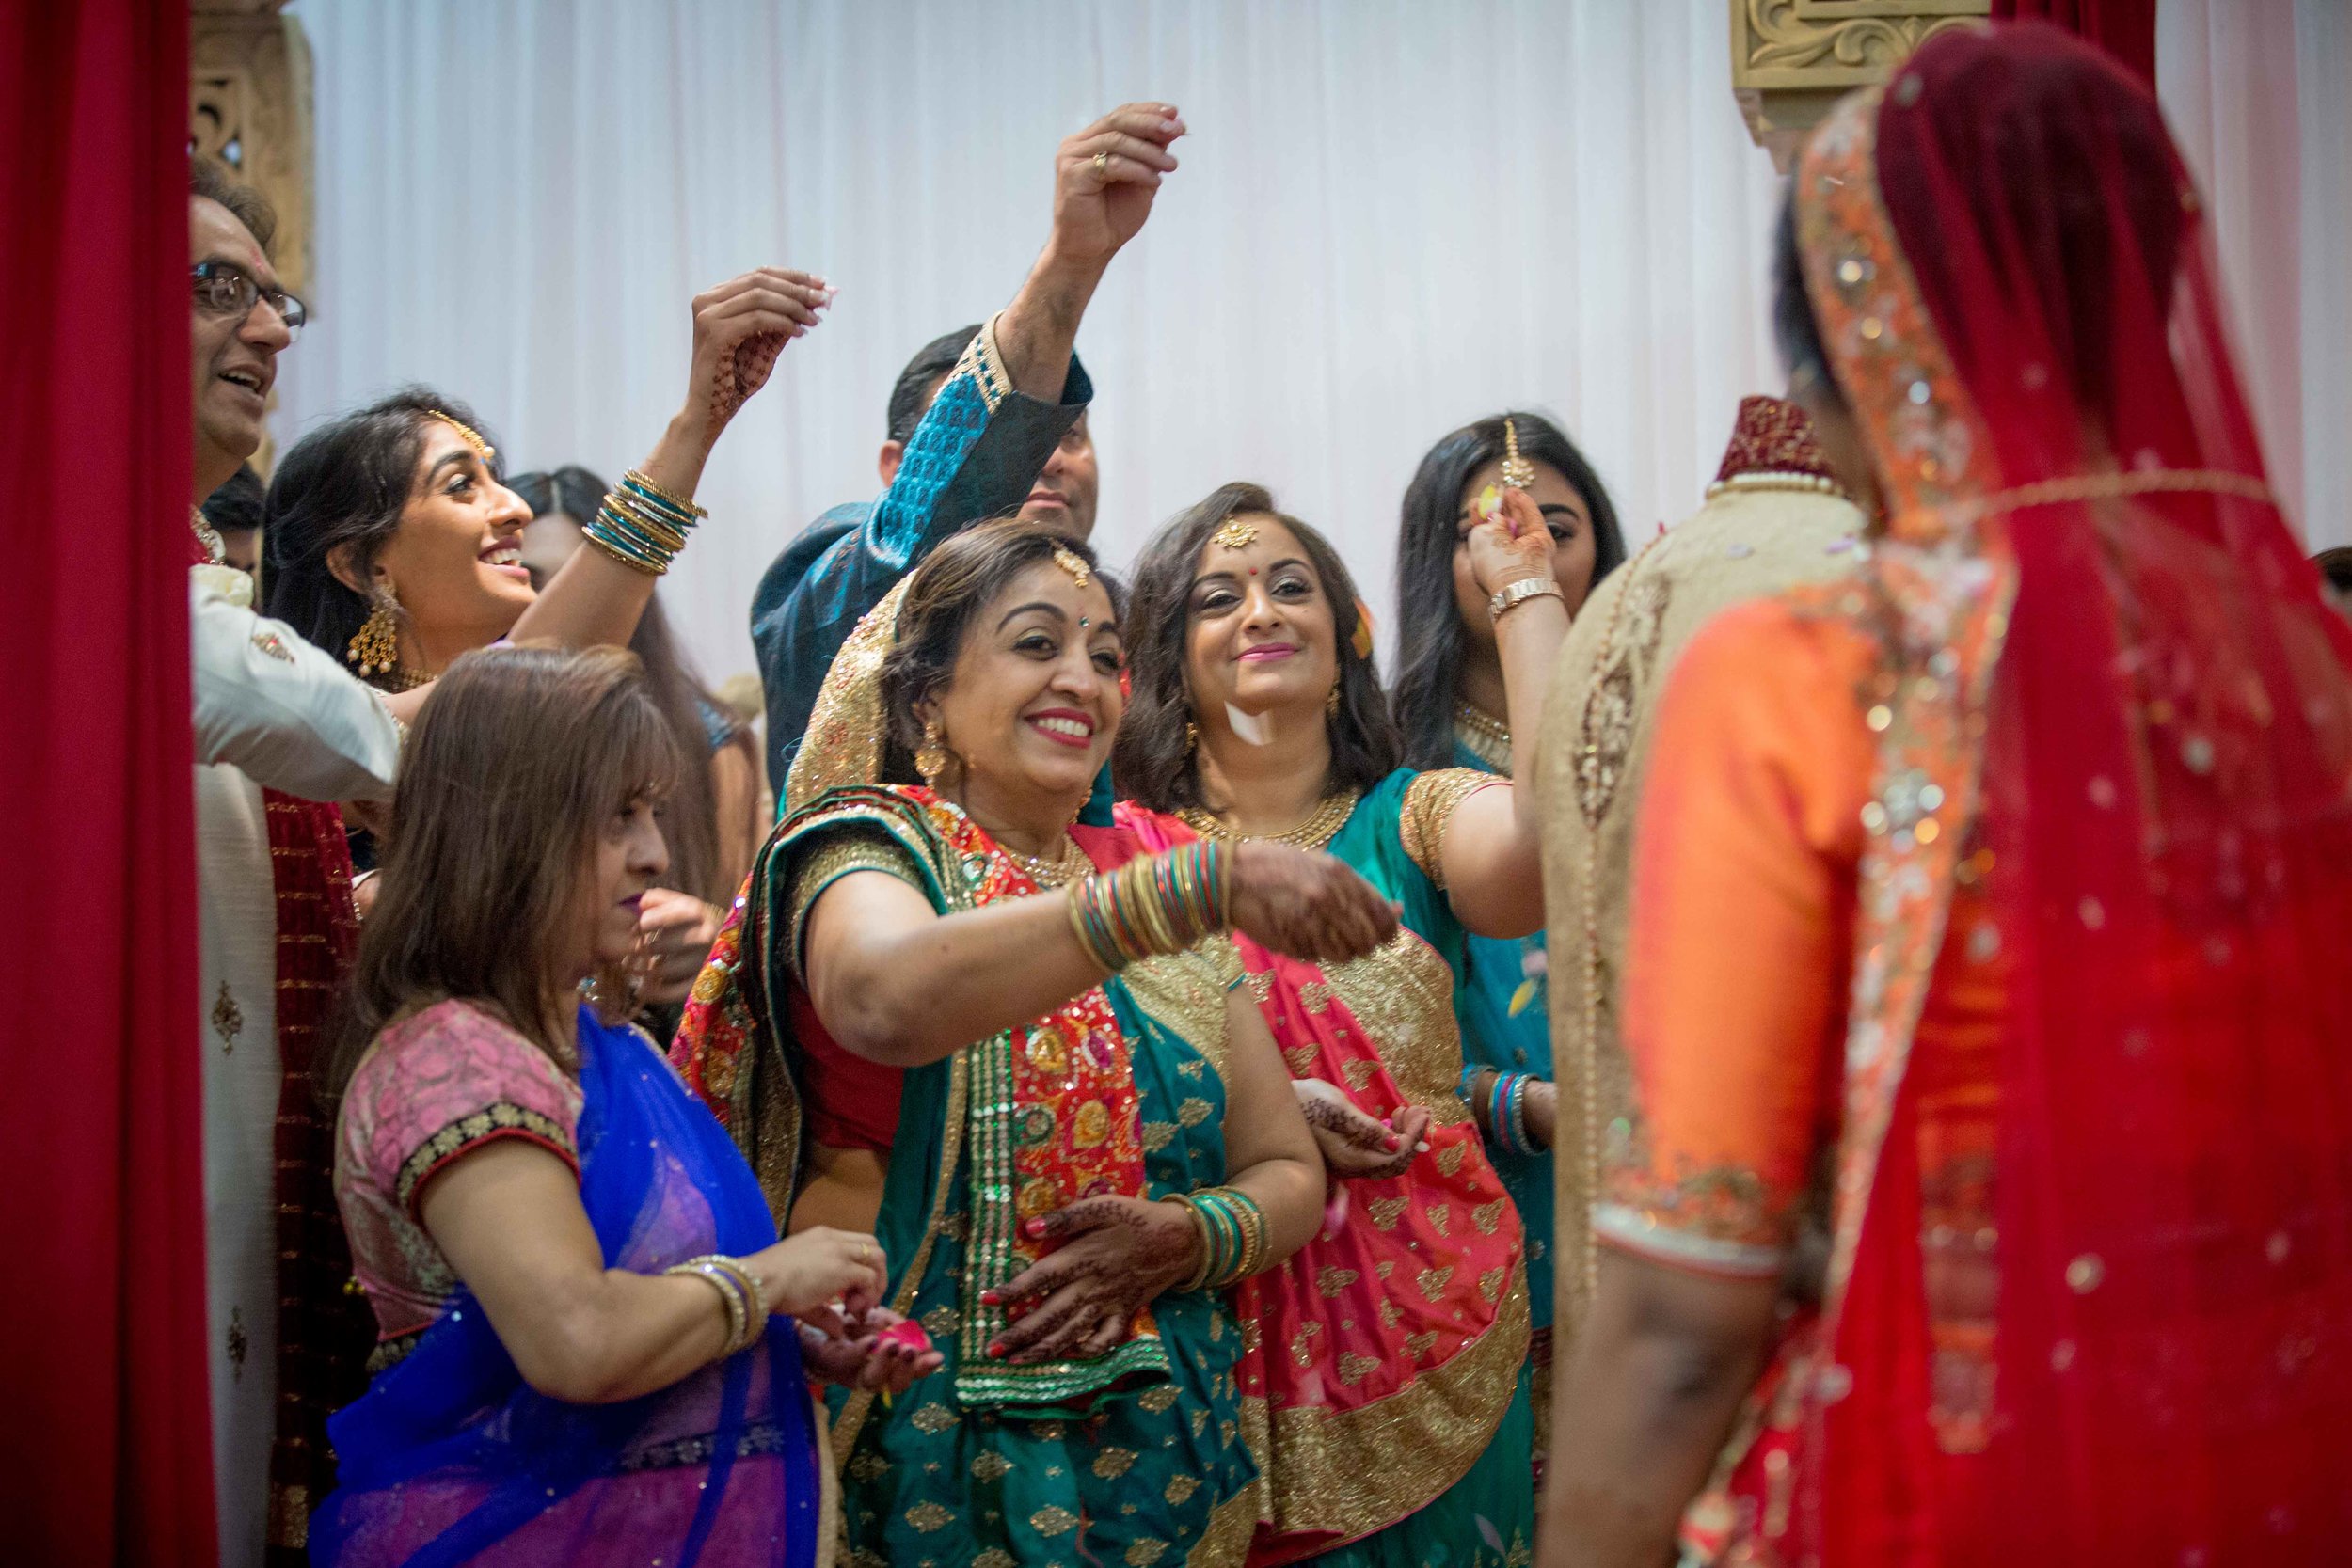 premier-banquetting-london-Hindu-asian-wedding-photographer-natalia-smith-photography-27.jpg